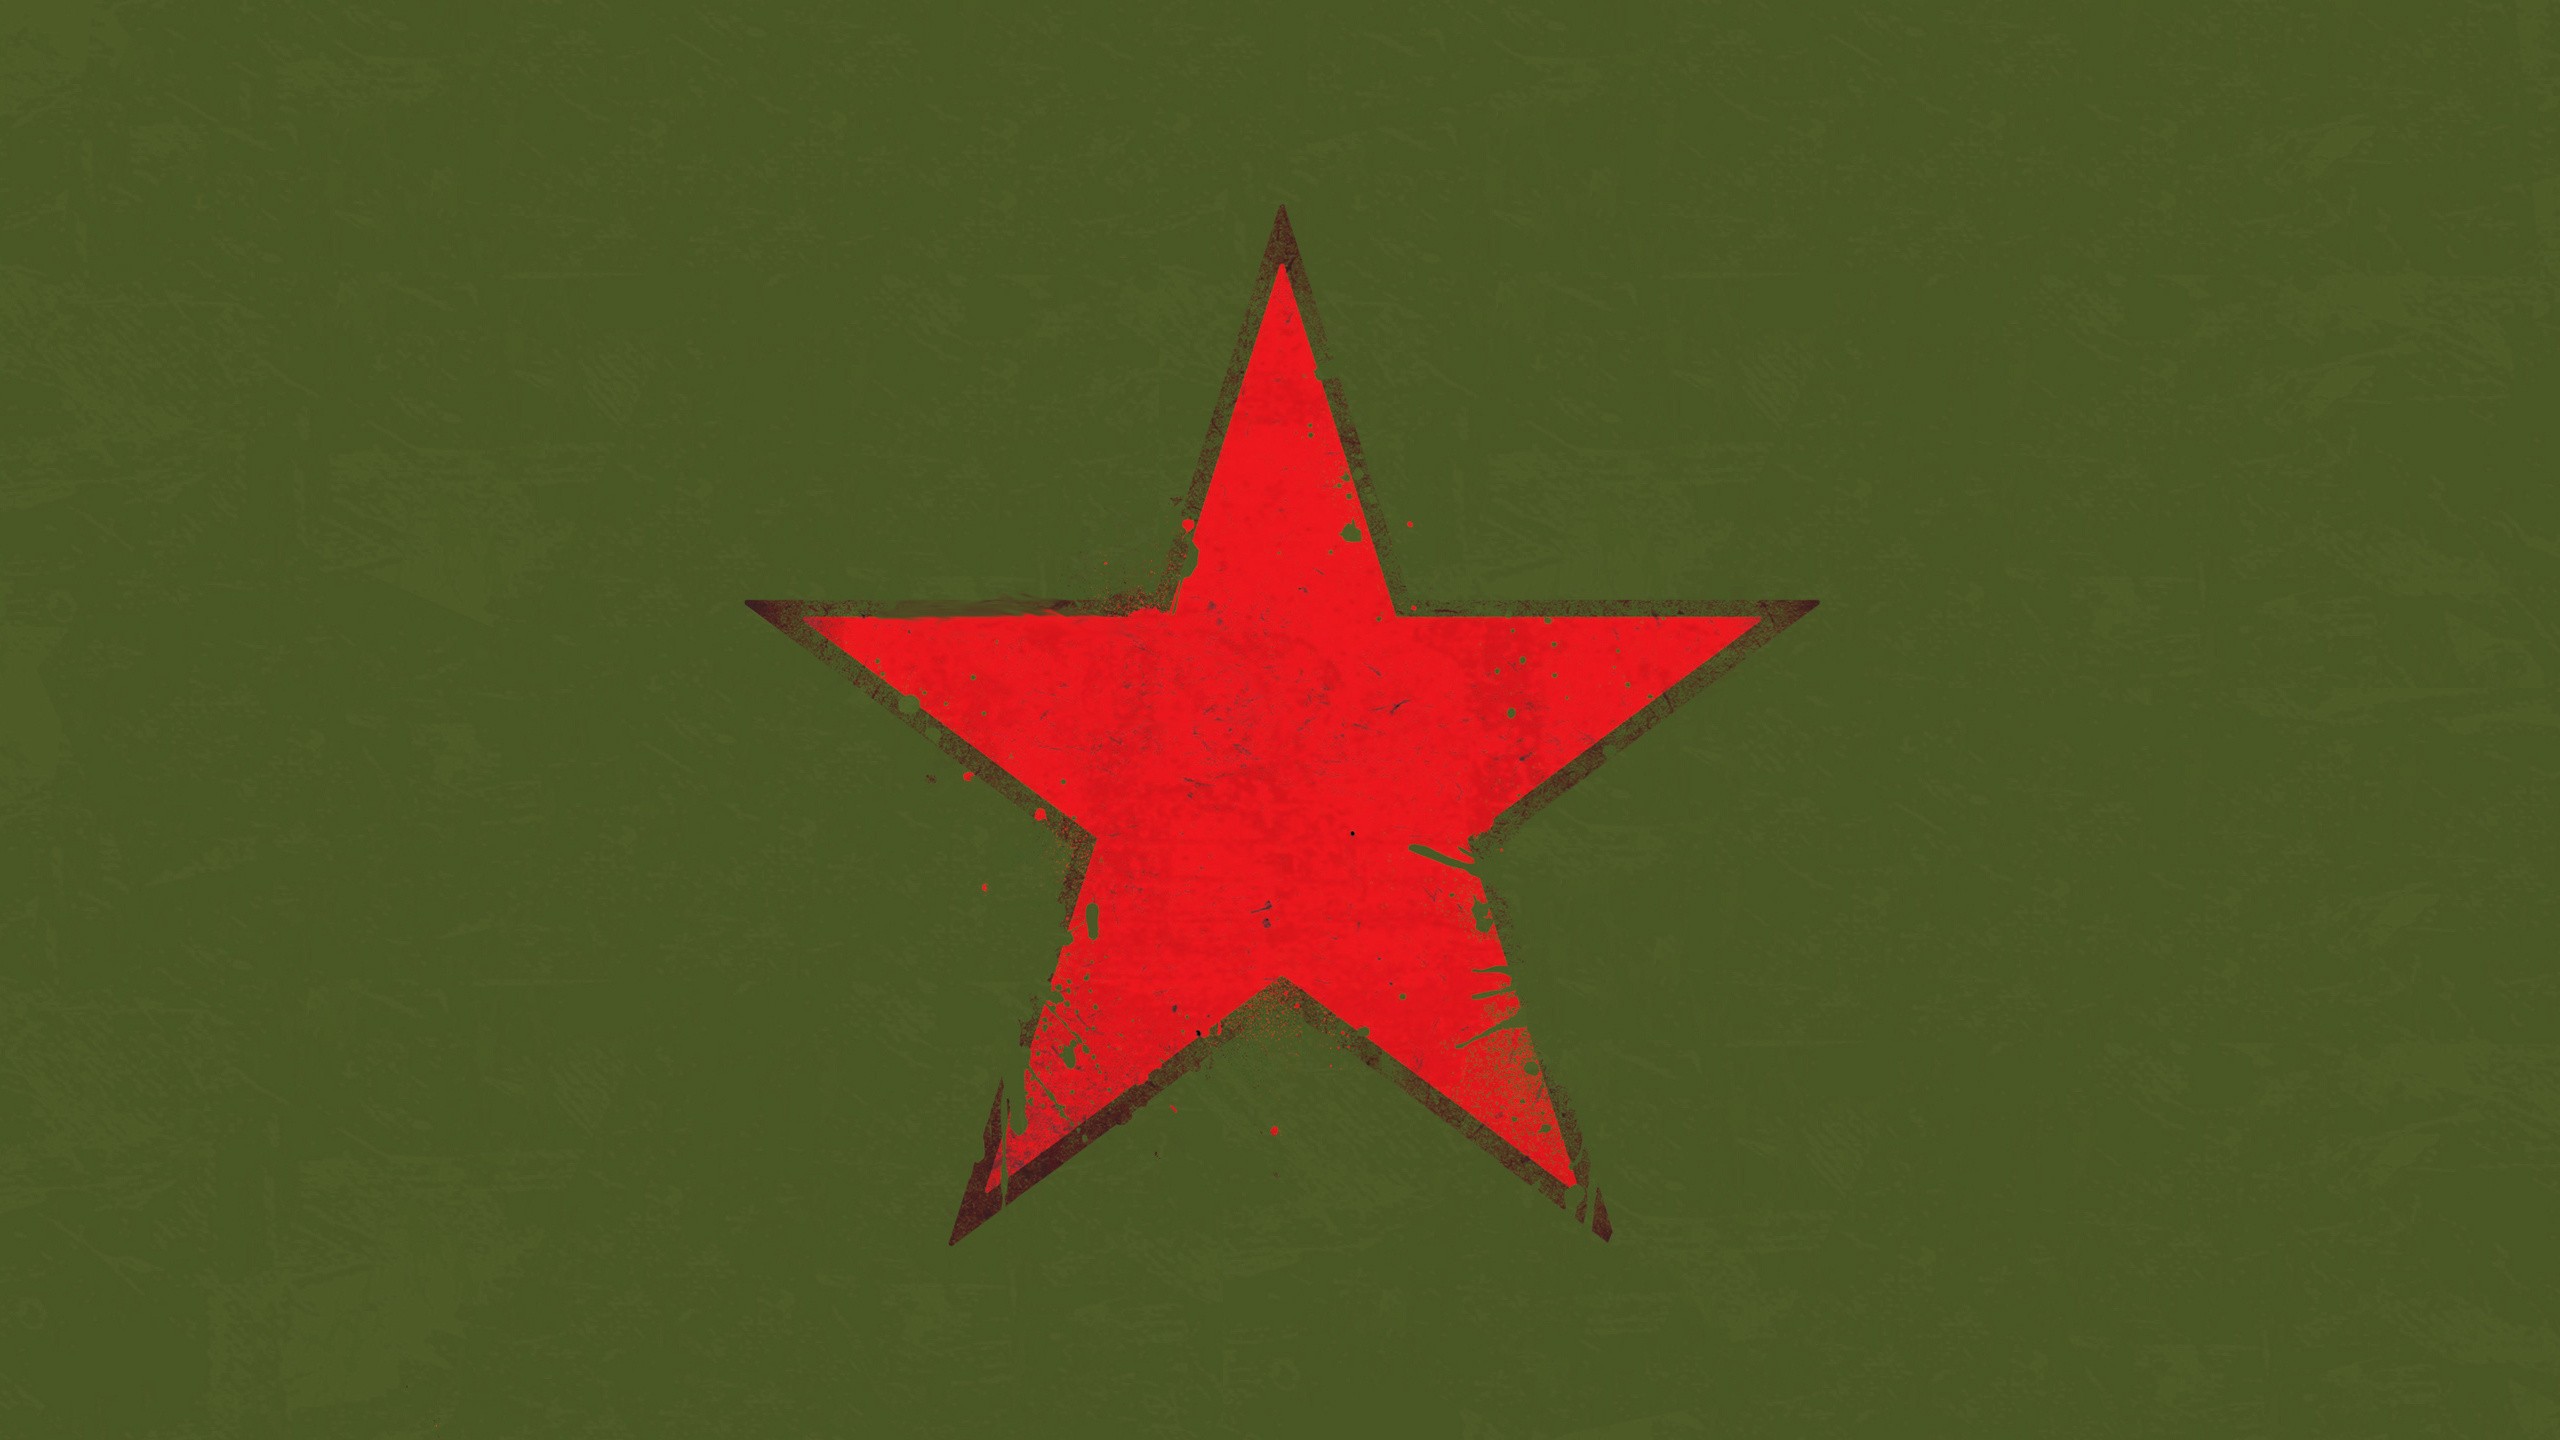 General 2560x1440 digital art CGI minimalism stars red star USSR army splashes green background military